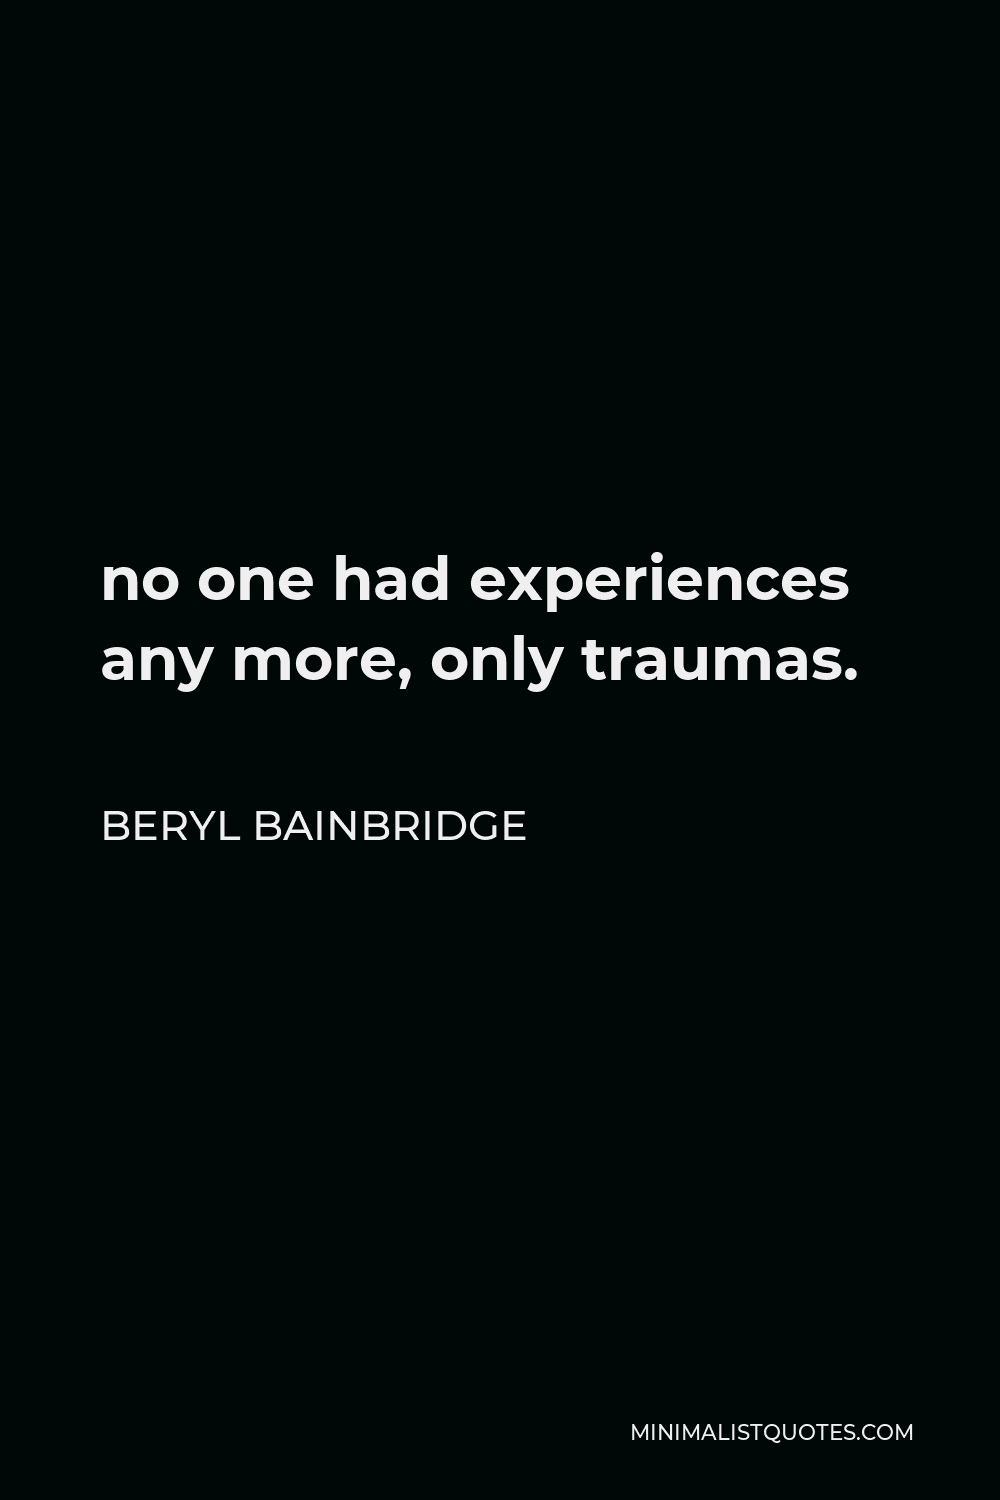 Beryl Bainbridge Quote - no one had experiences any more, only traumas.